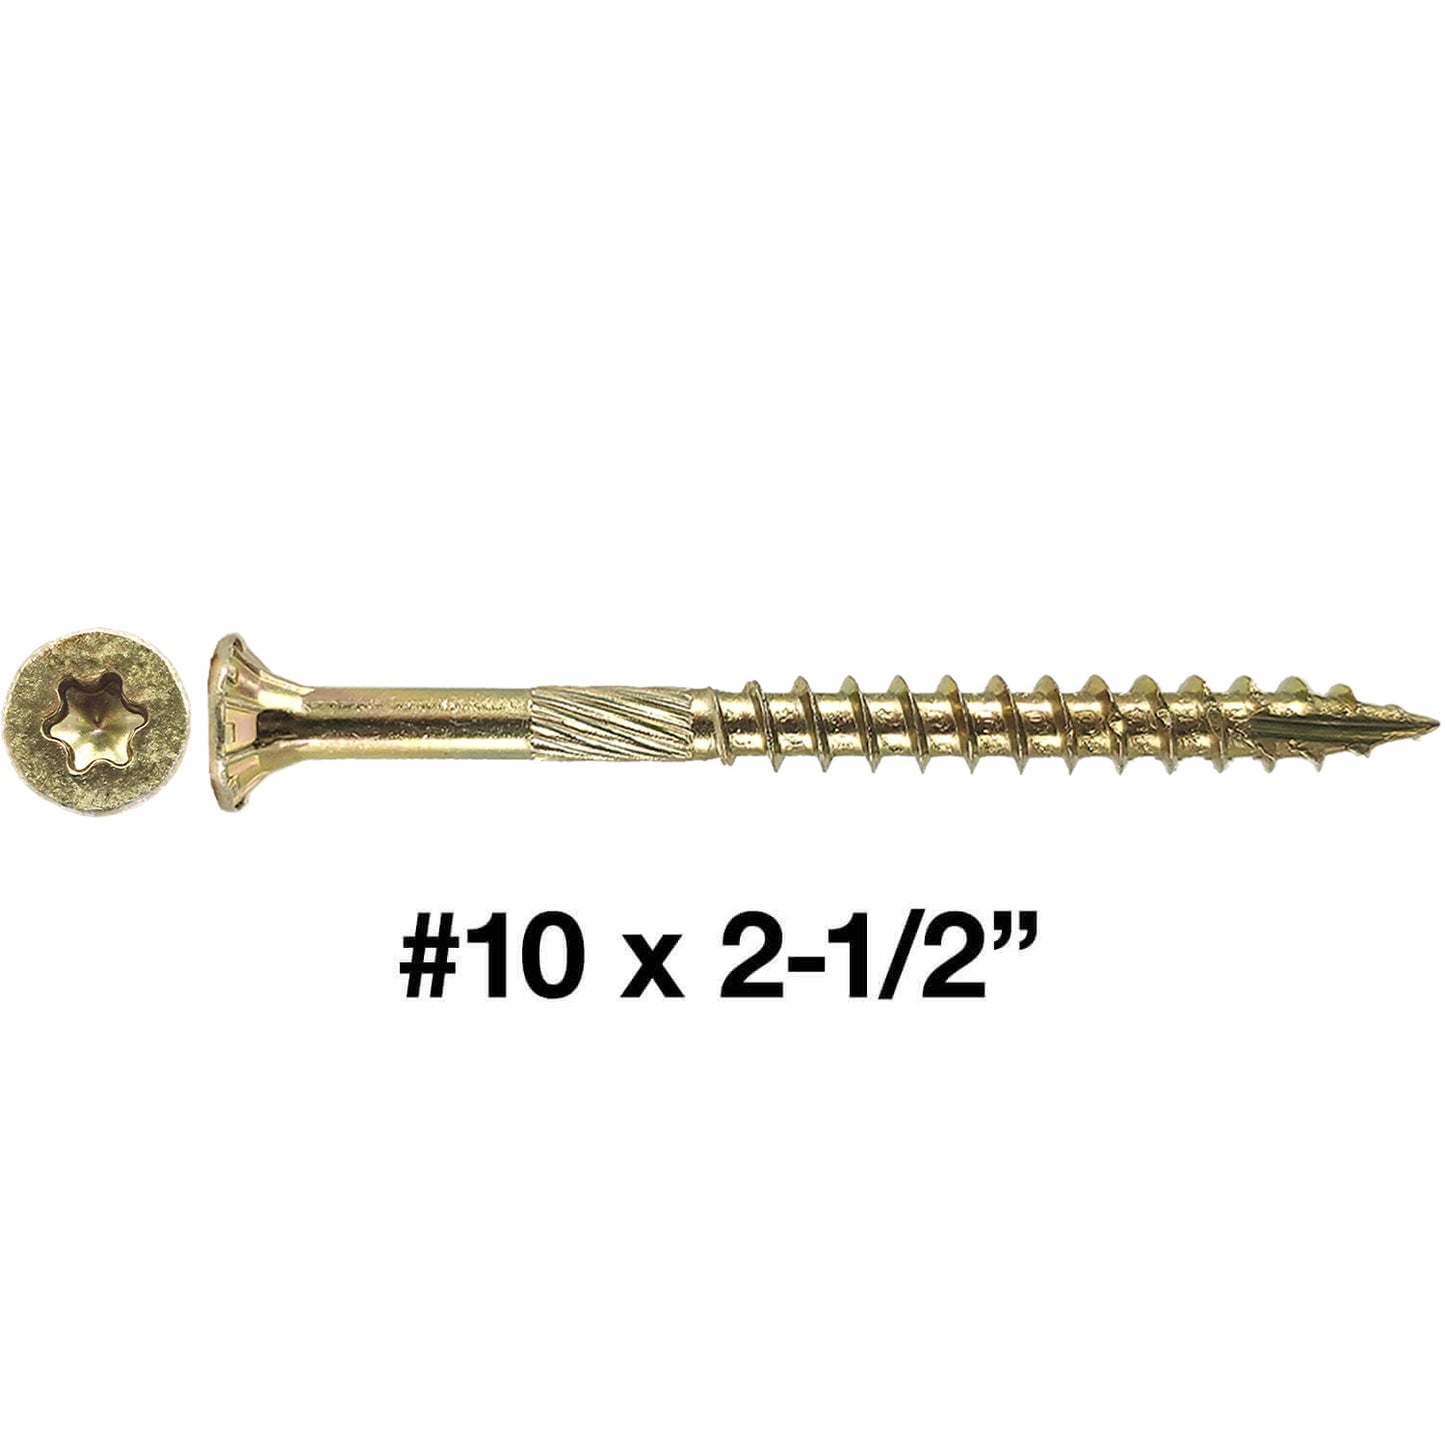 #10  (YTX) Yellow Zinc Coated General Purpose Wood Screws. Torx/Star Drive Head - Multipurpose Torx/Star Drive Wood Screws